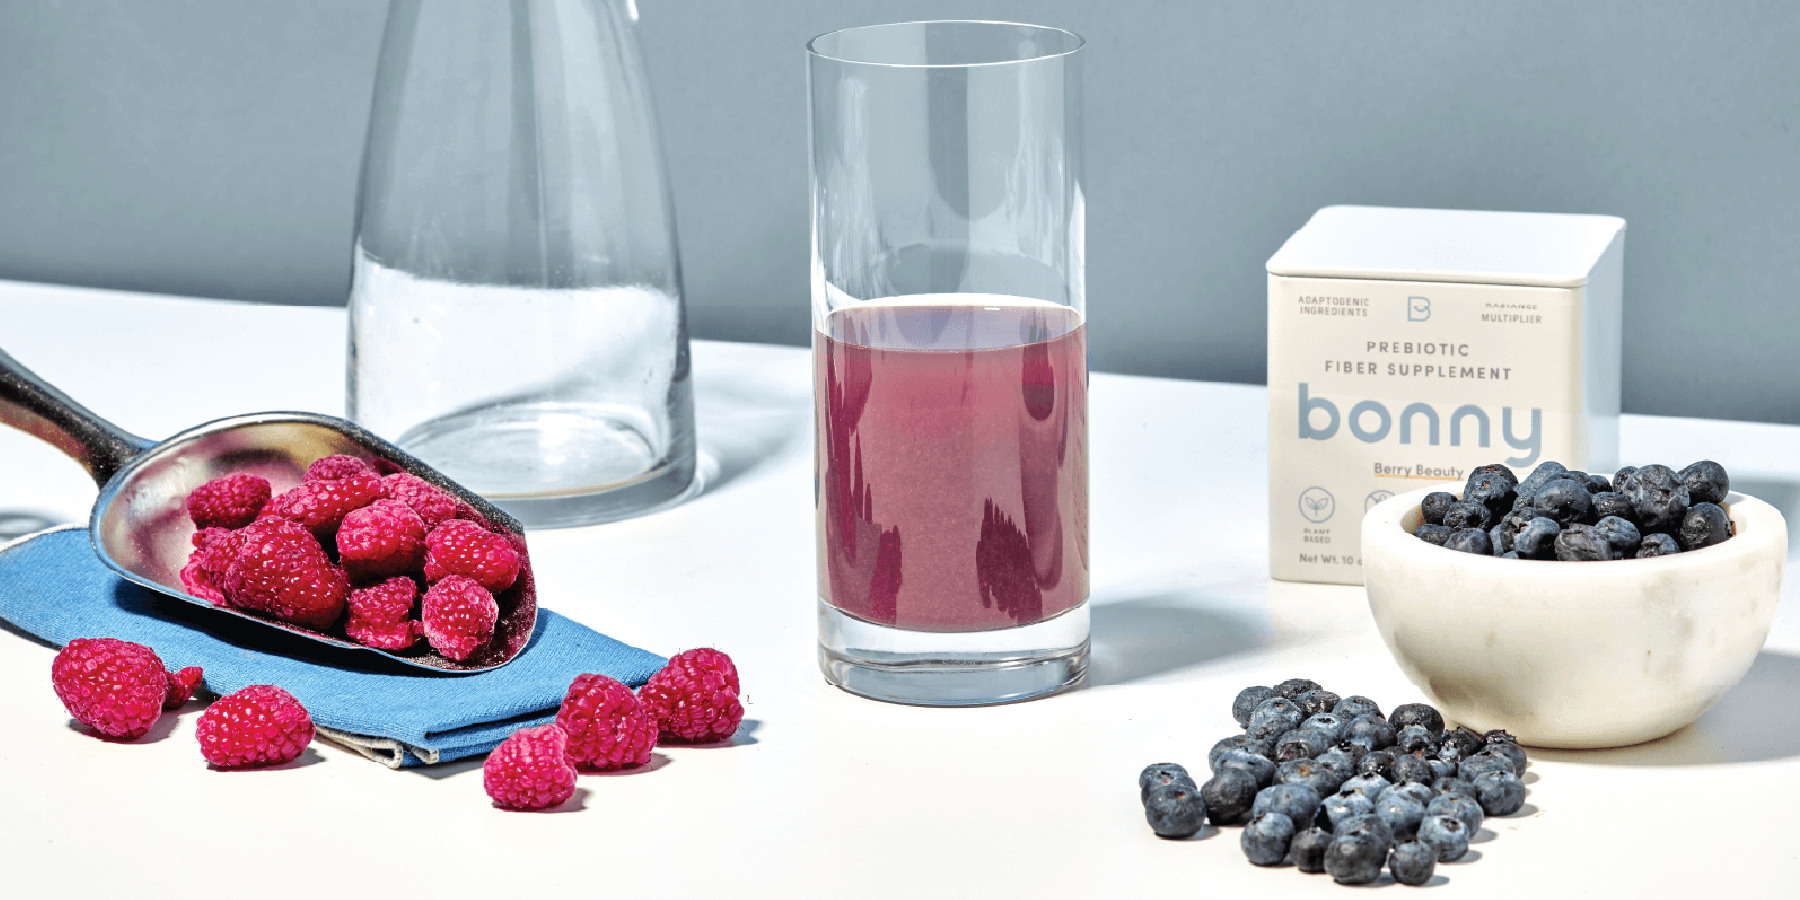 Bonny fiber supplements with fruits